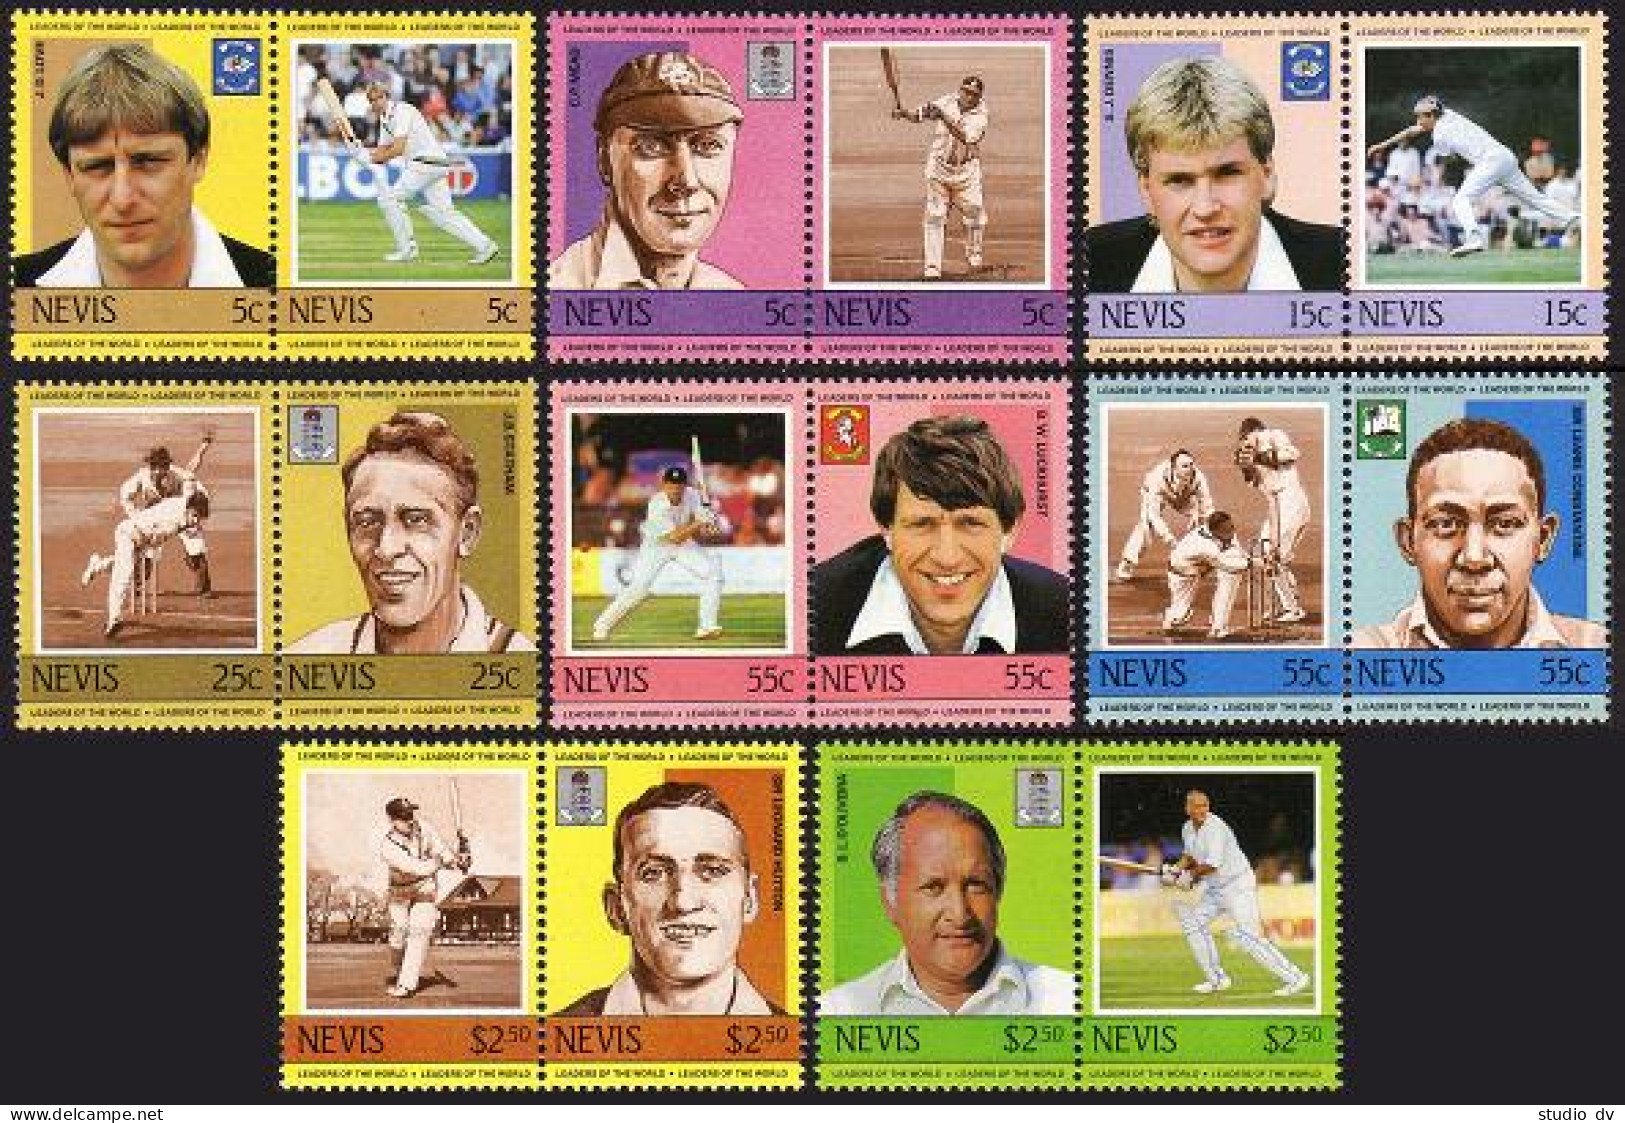 Nevis 383-390 Ab,MNH.Michel 186-193,220-227. World Leaders-Cricket Players,1984. - St.Kitts En Nevis ( 1983-...)